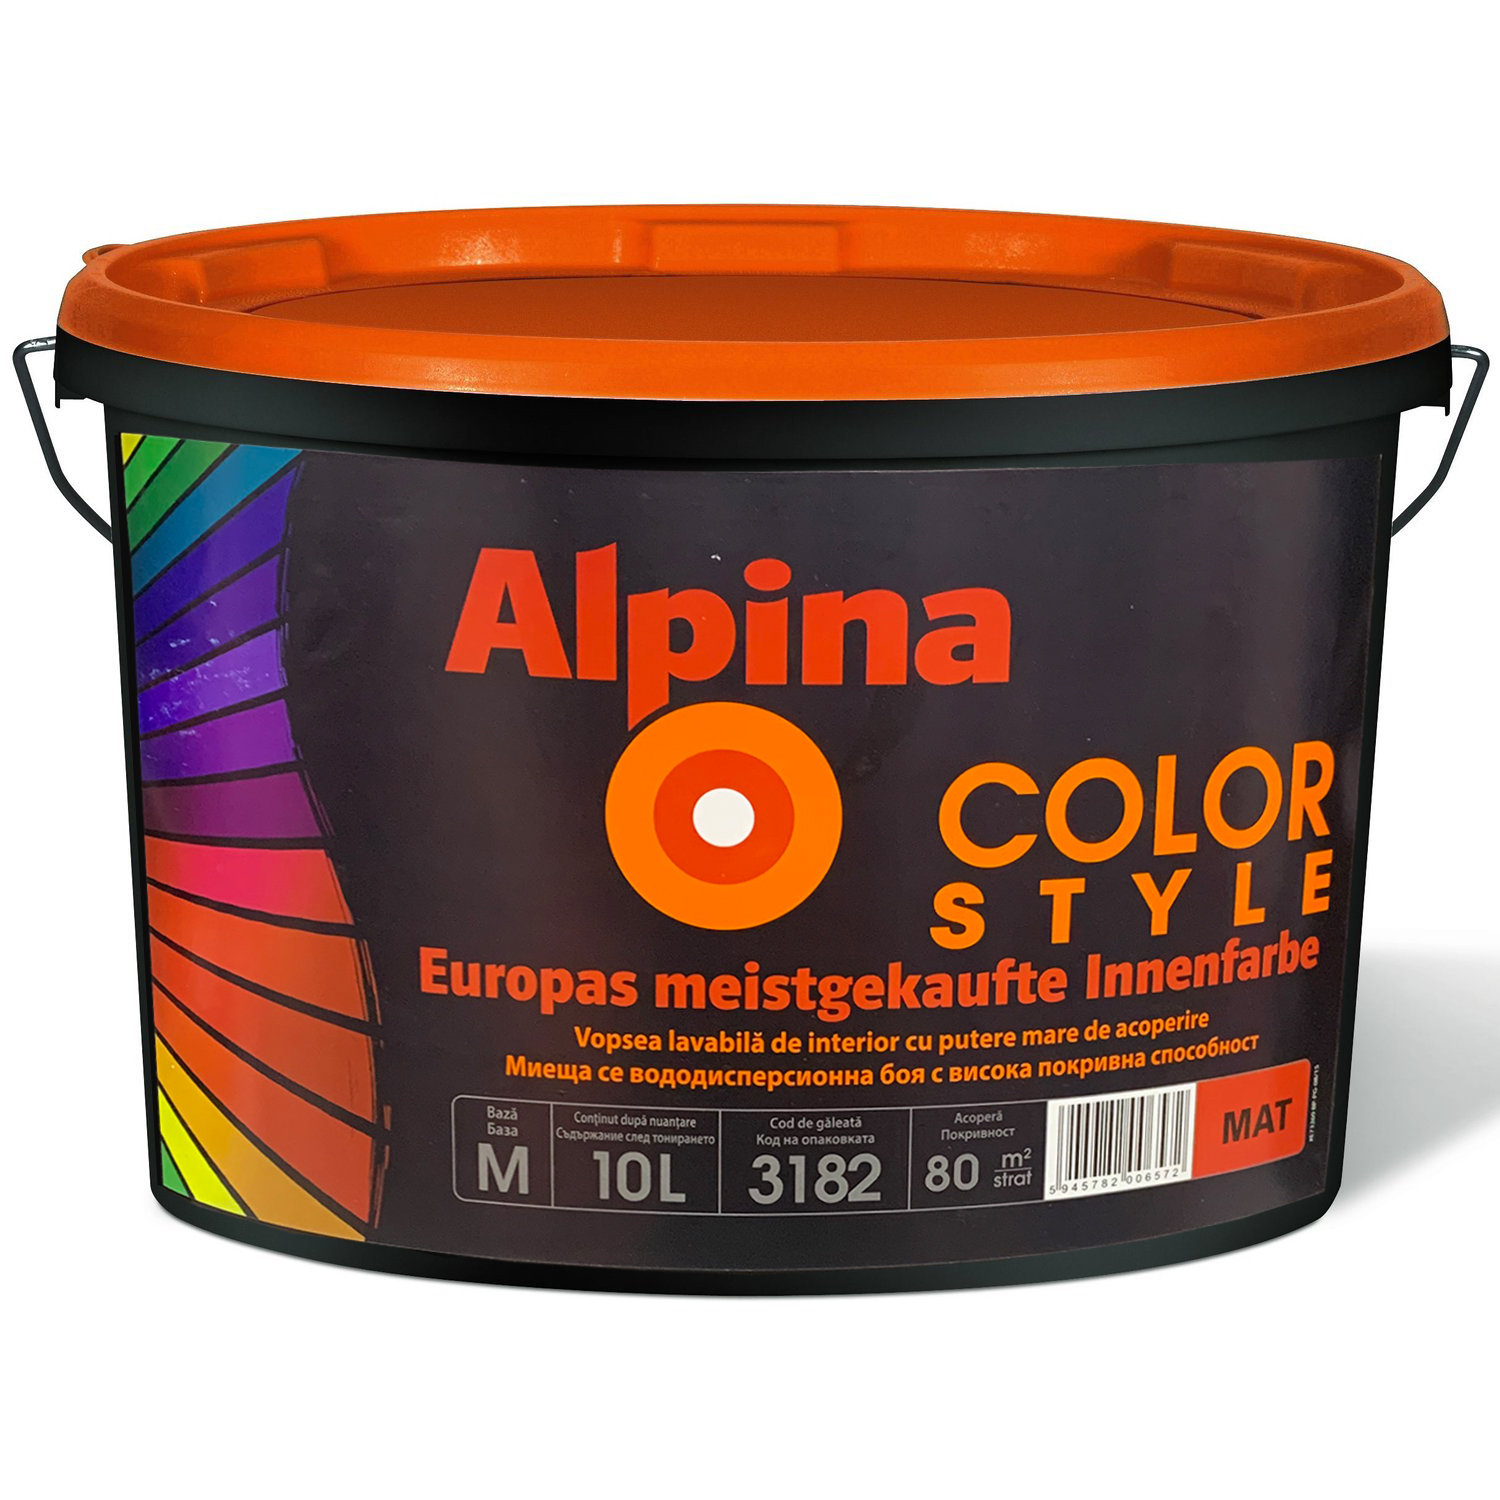 Vopsea emulsie de apă  Alpina Color Style Baza M 10 LT